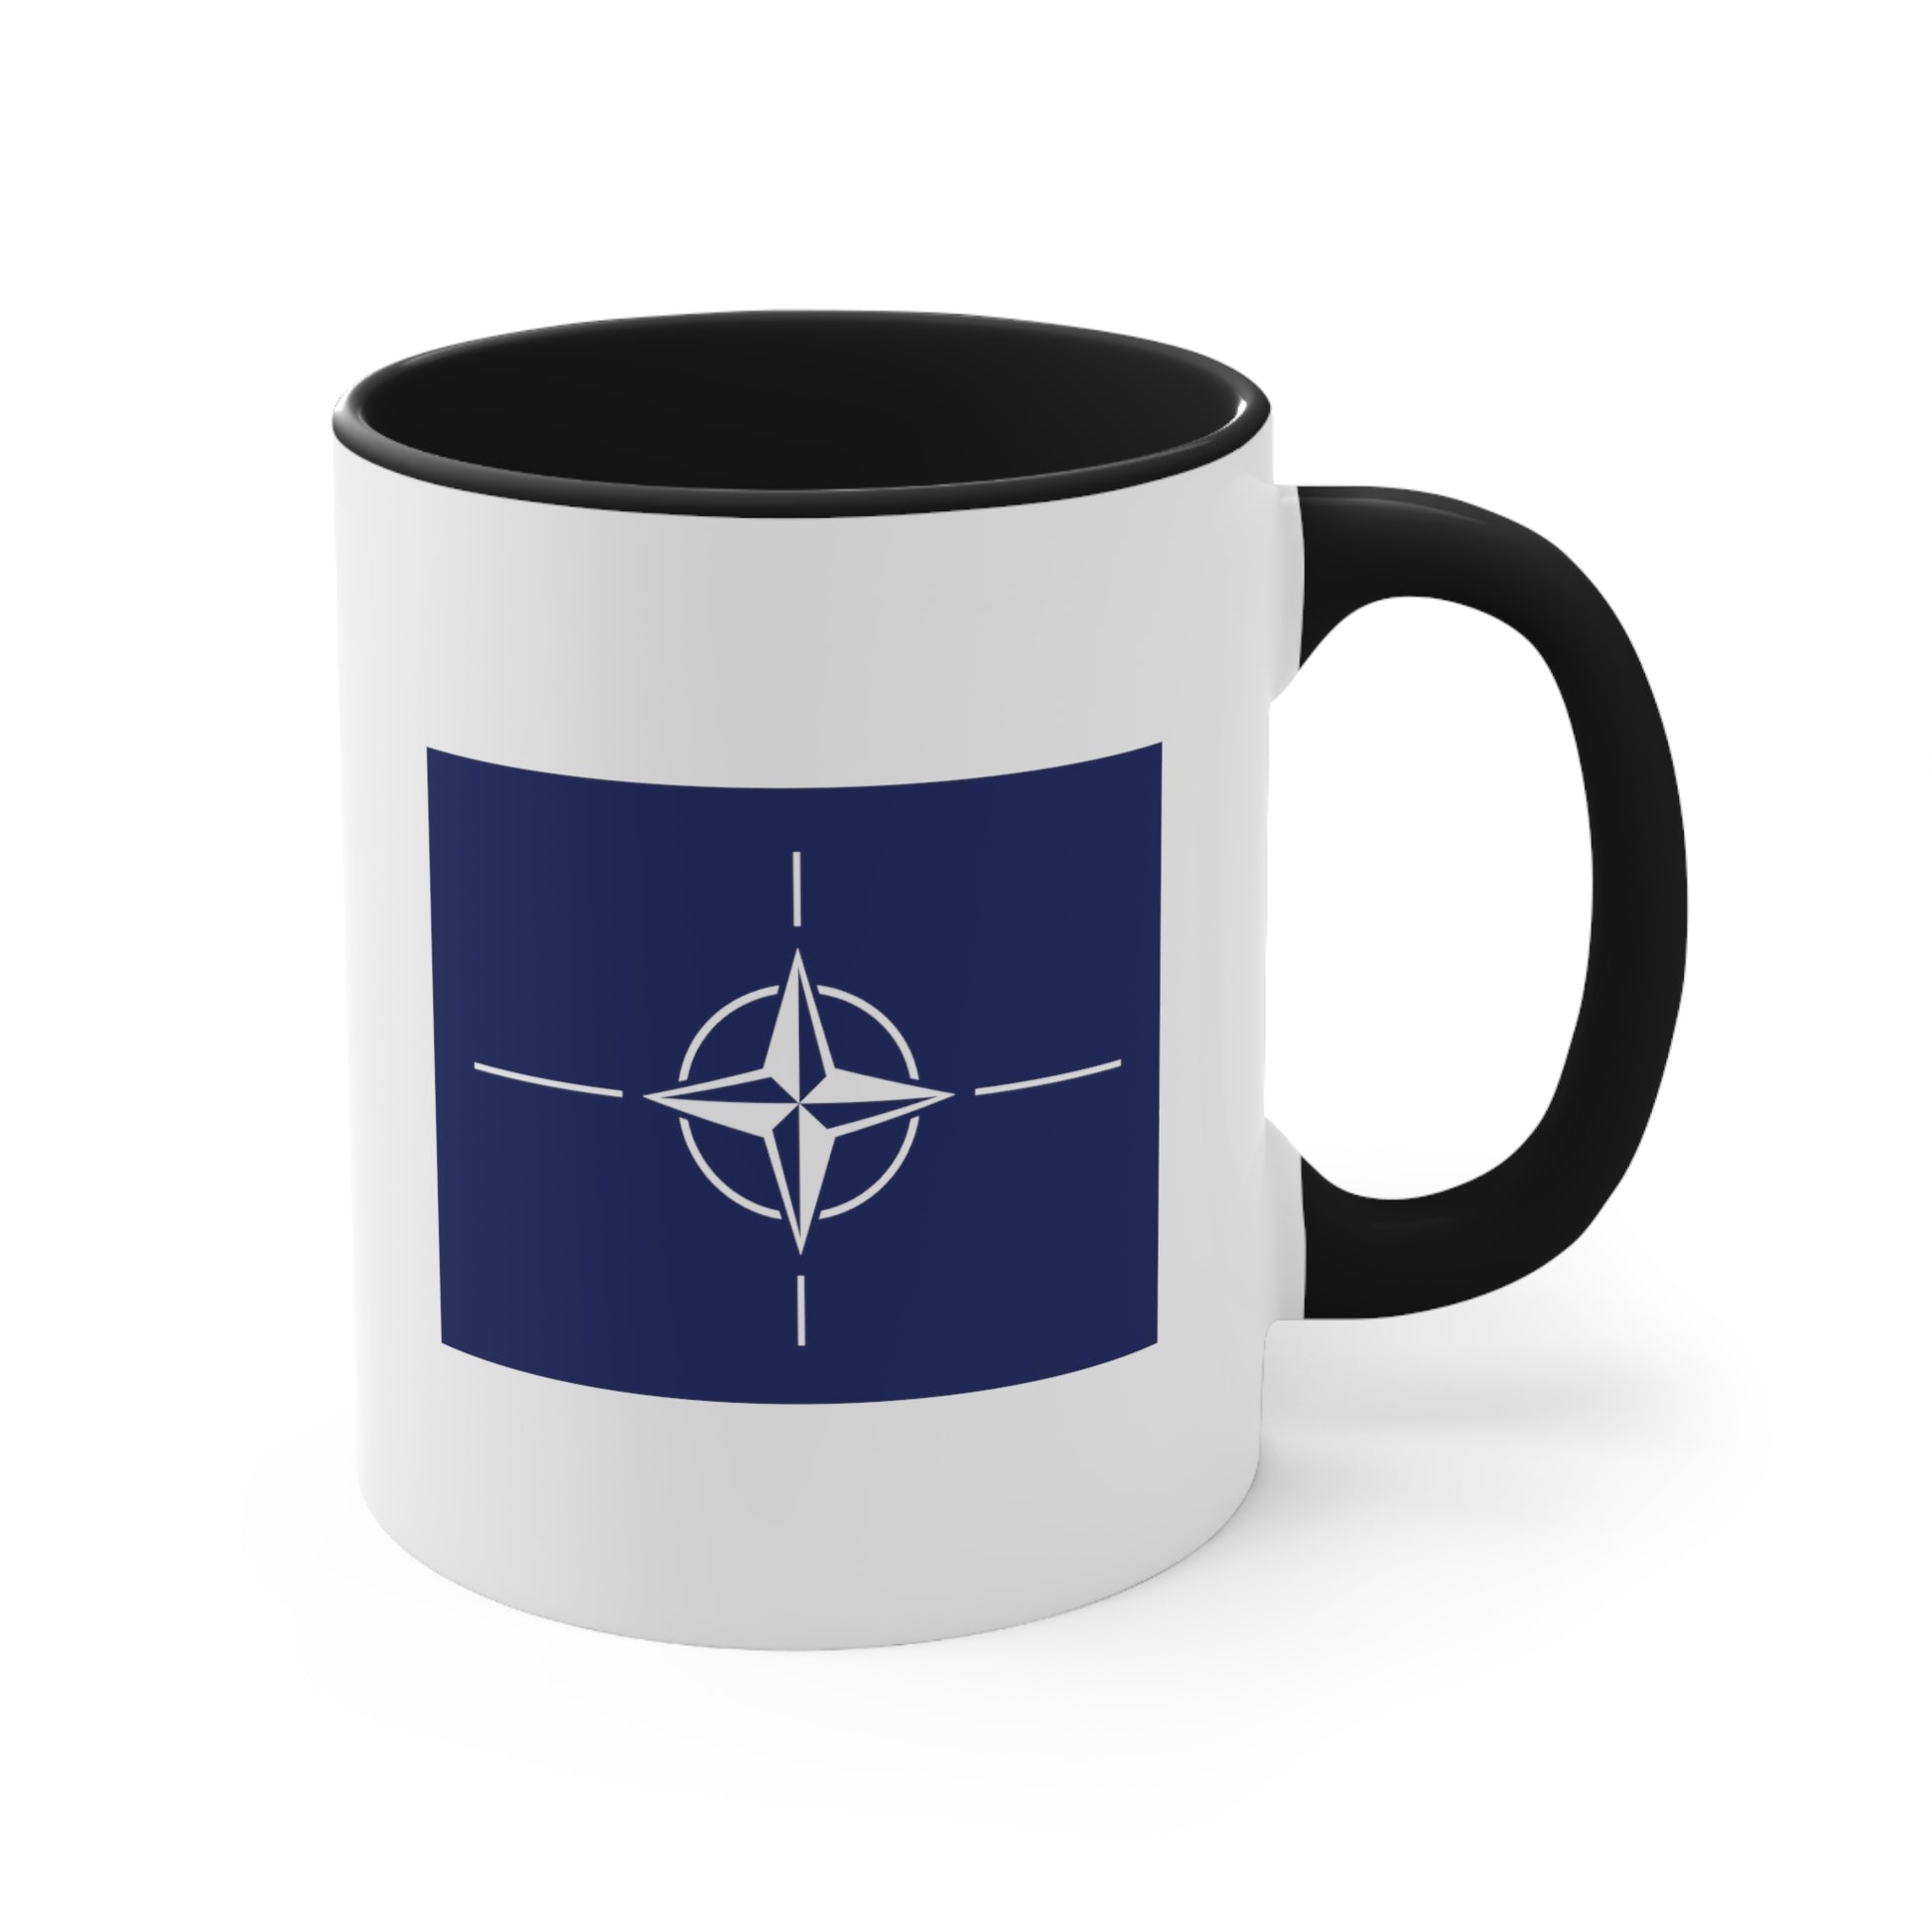 NATO Coffee Mug - Double Sided Black Accent White Ceramic 11oz by TheGlassyLass.com